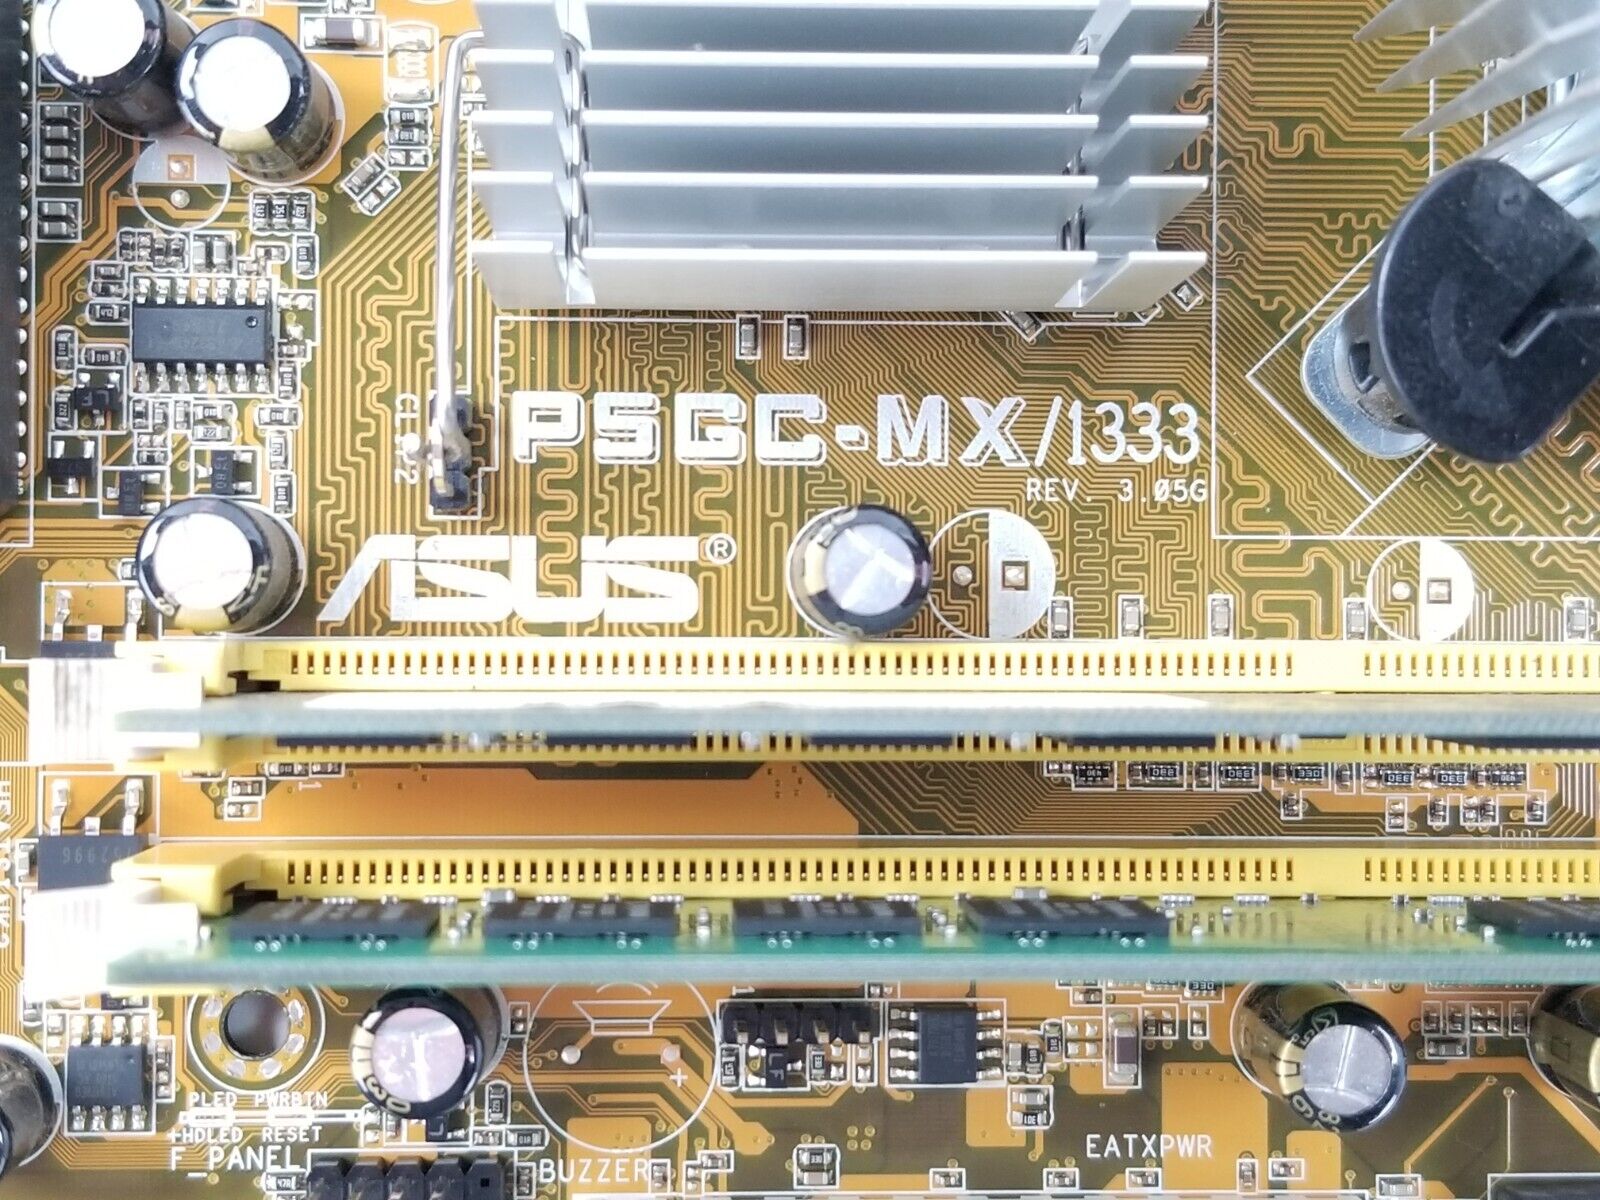 Asus P5GC-MX Motherboard Intel Core 2 Duo E4700 2.6GHz 2GB RAM I/O Shield